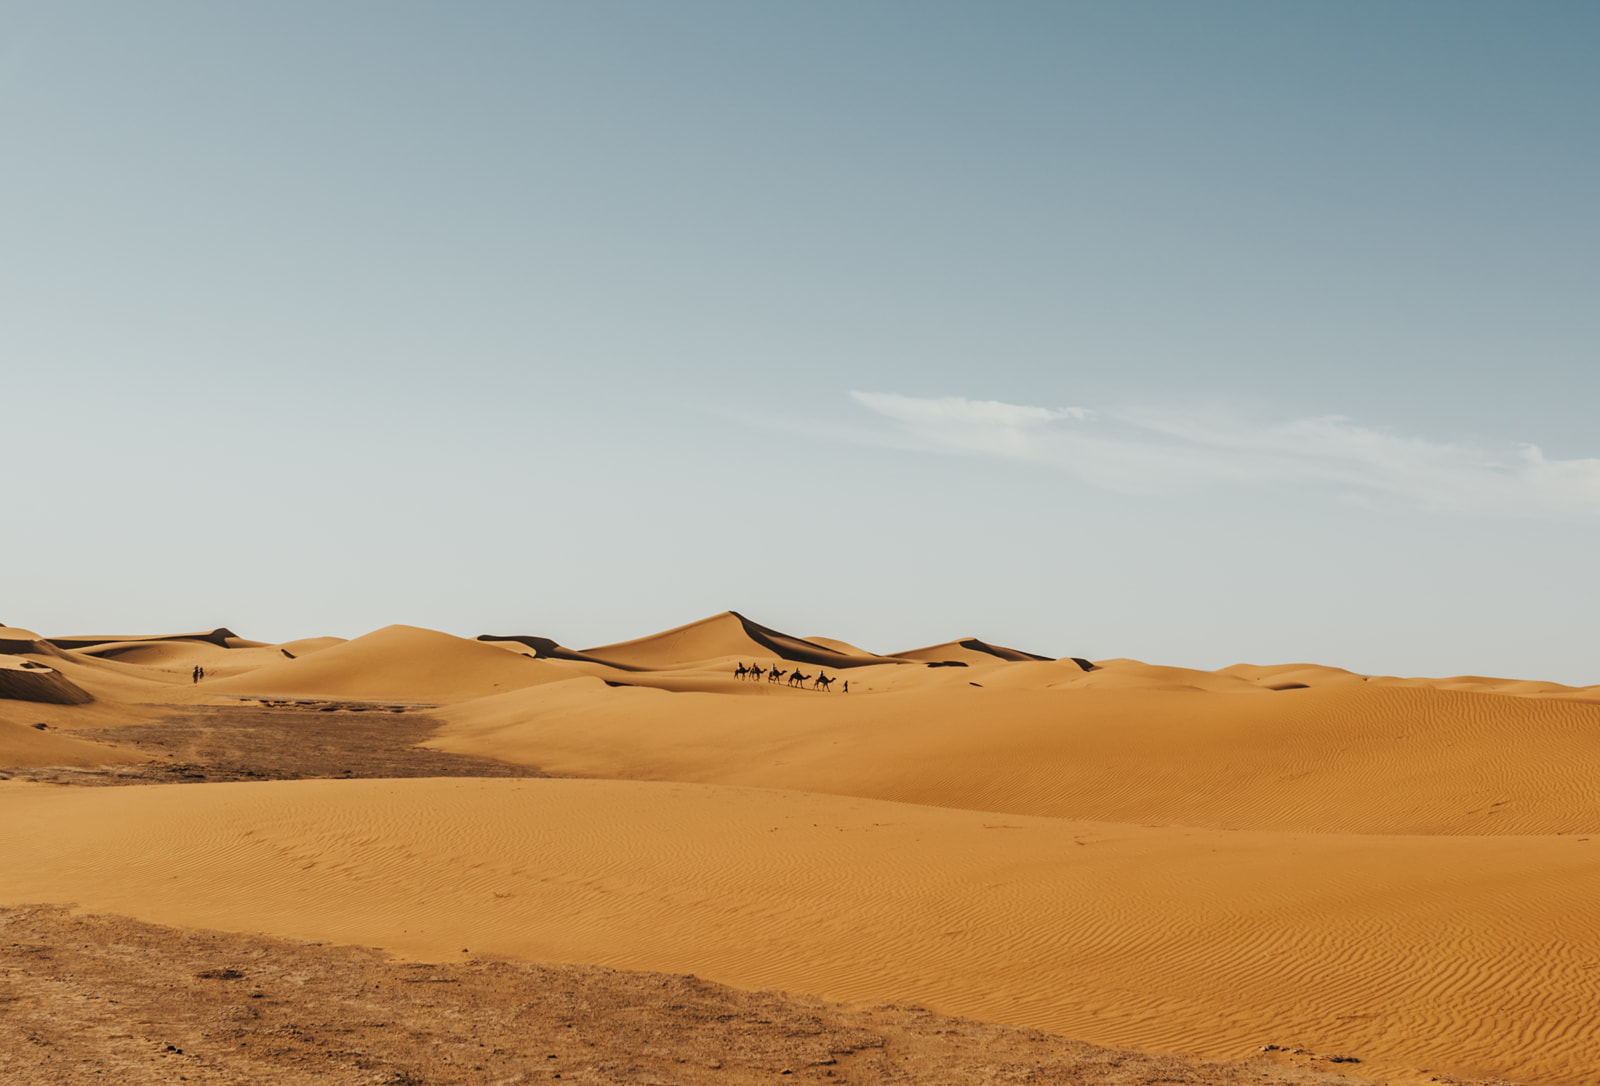 Sahara desert luxury camp site camel ride